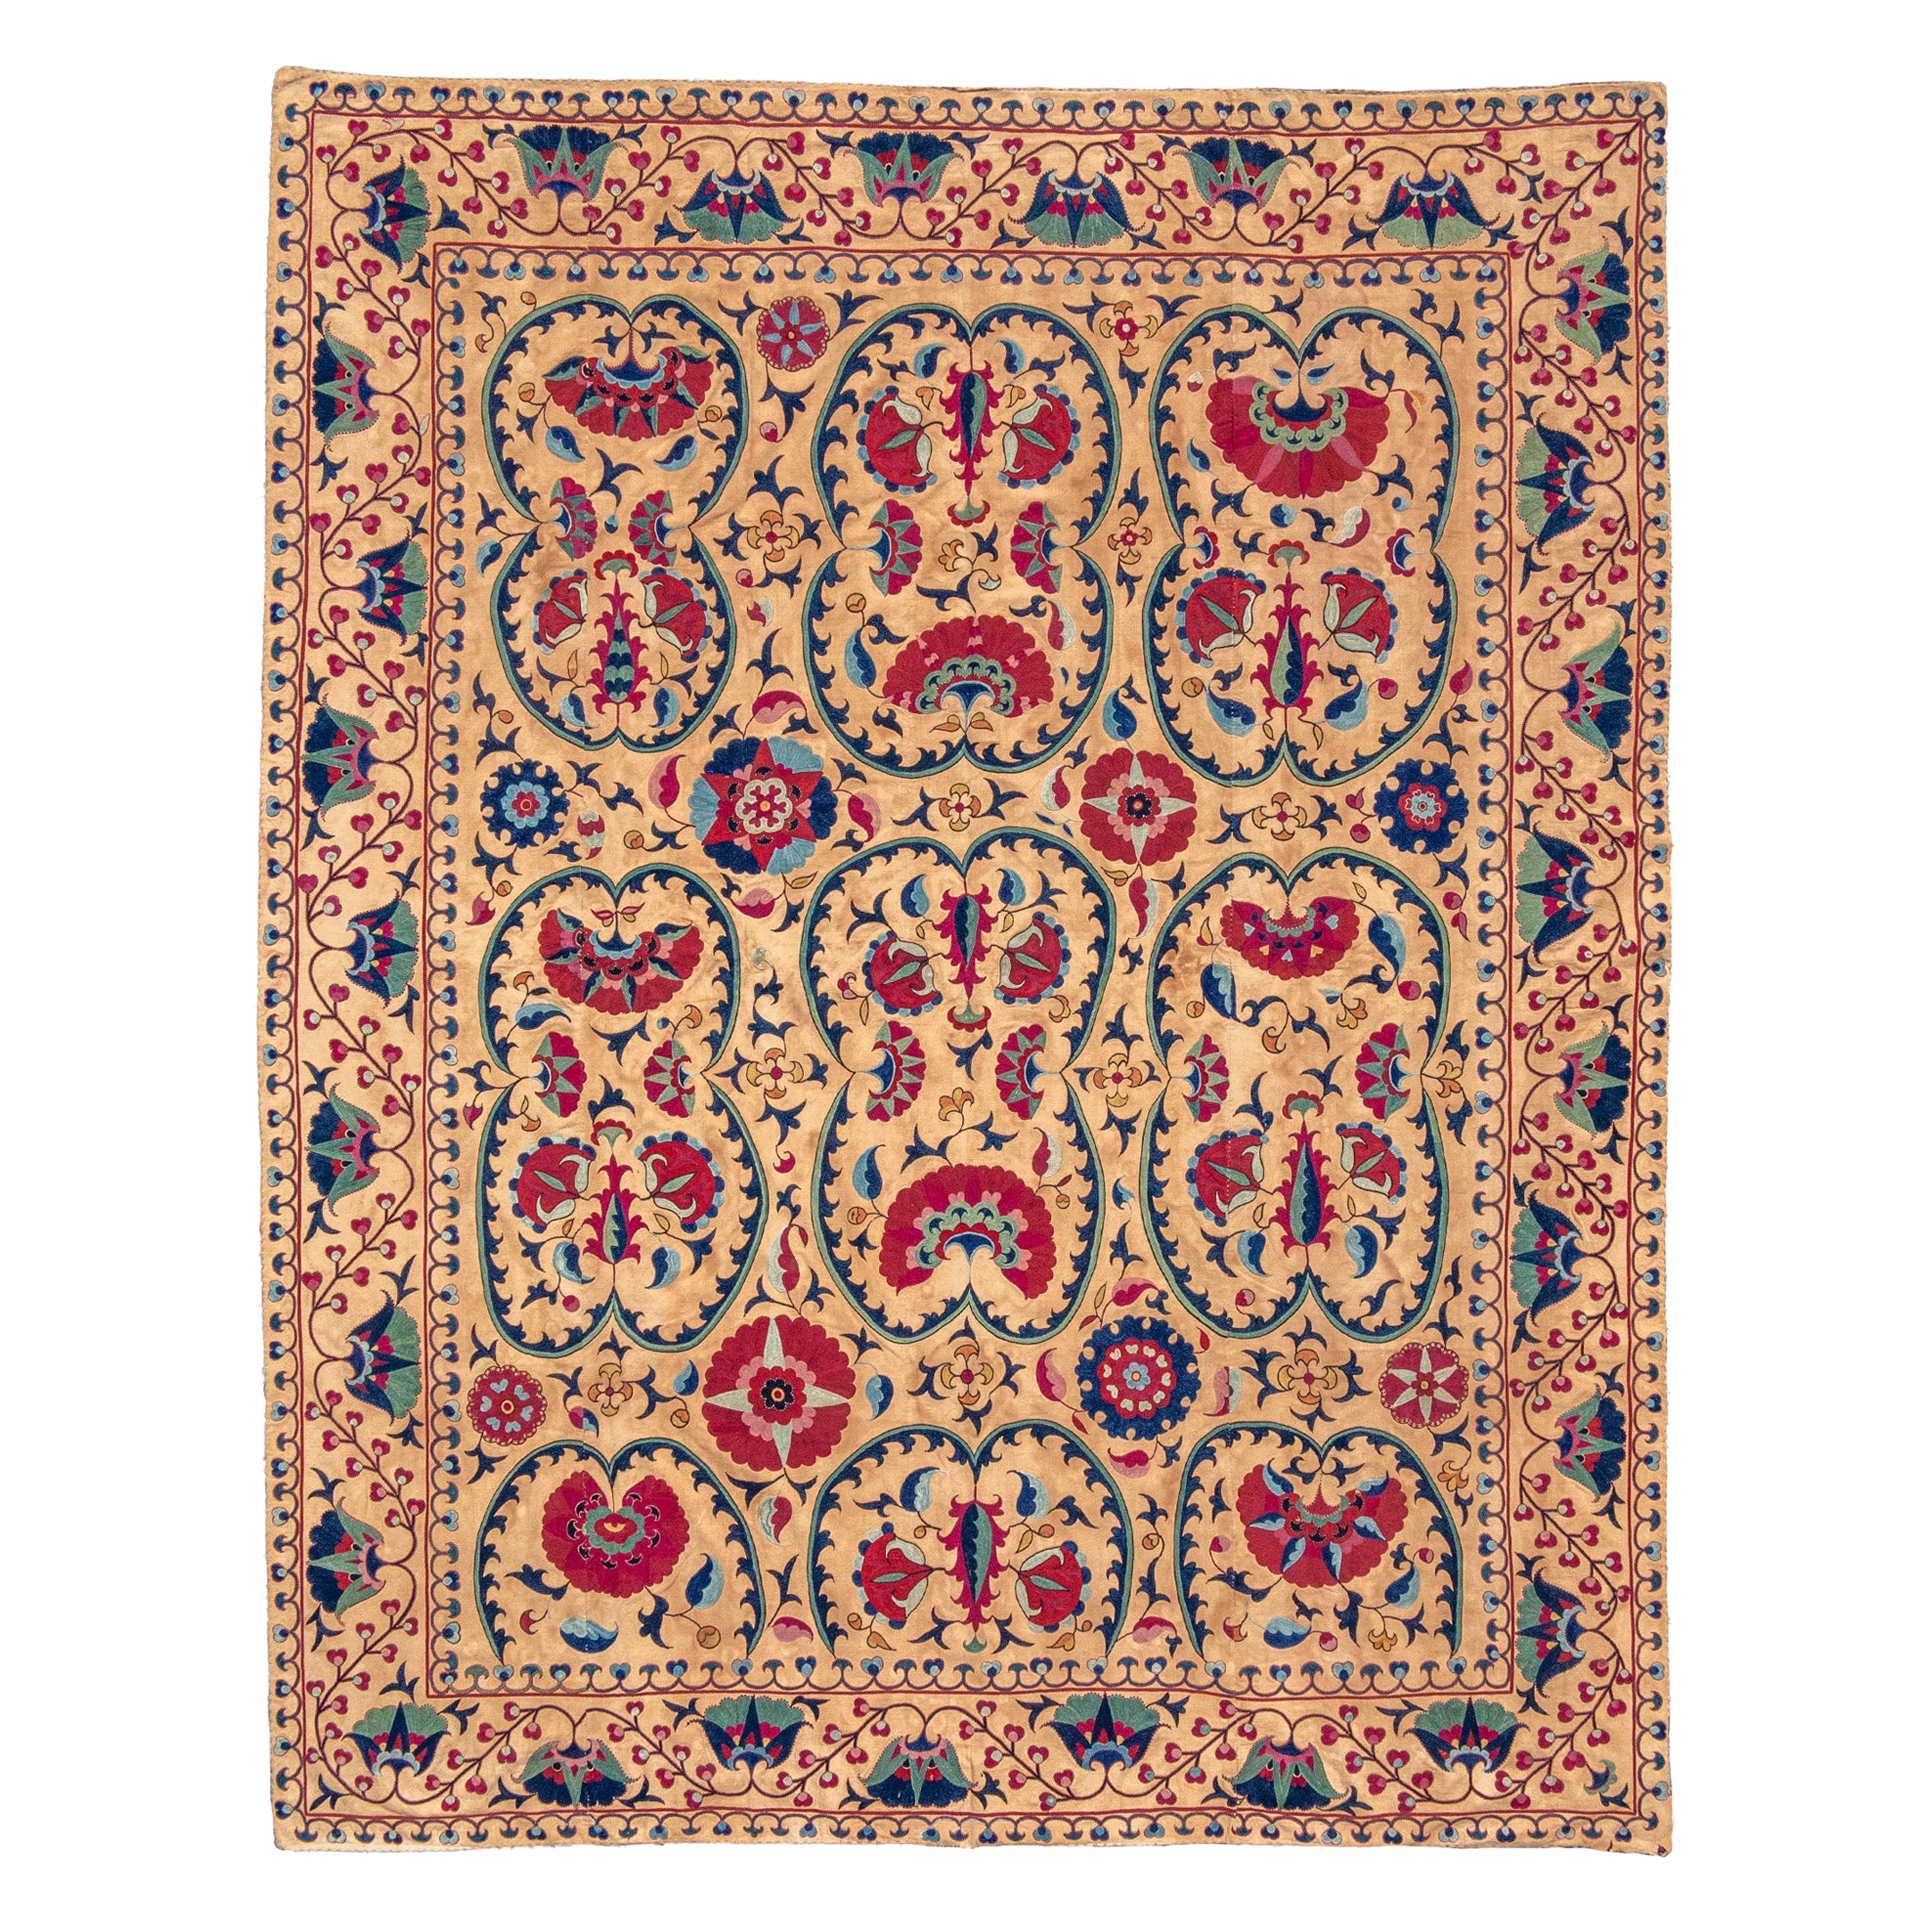 Antique Suzani Embroidered Cover, 19th Century